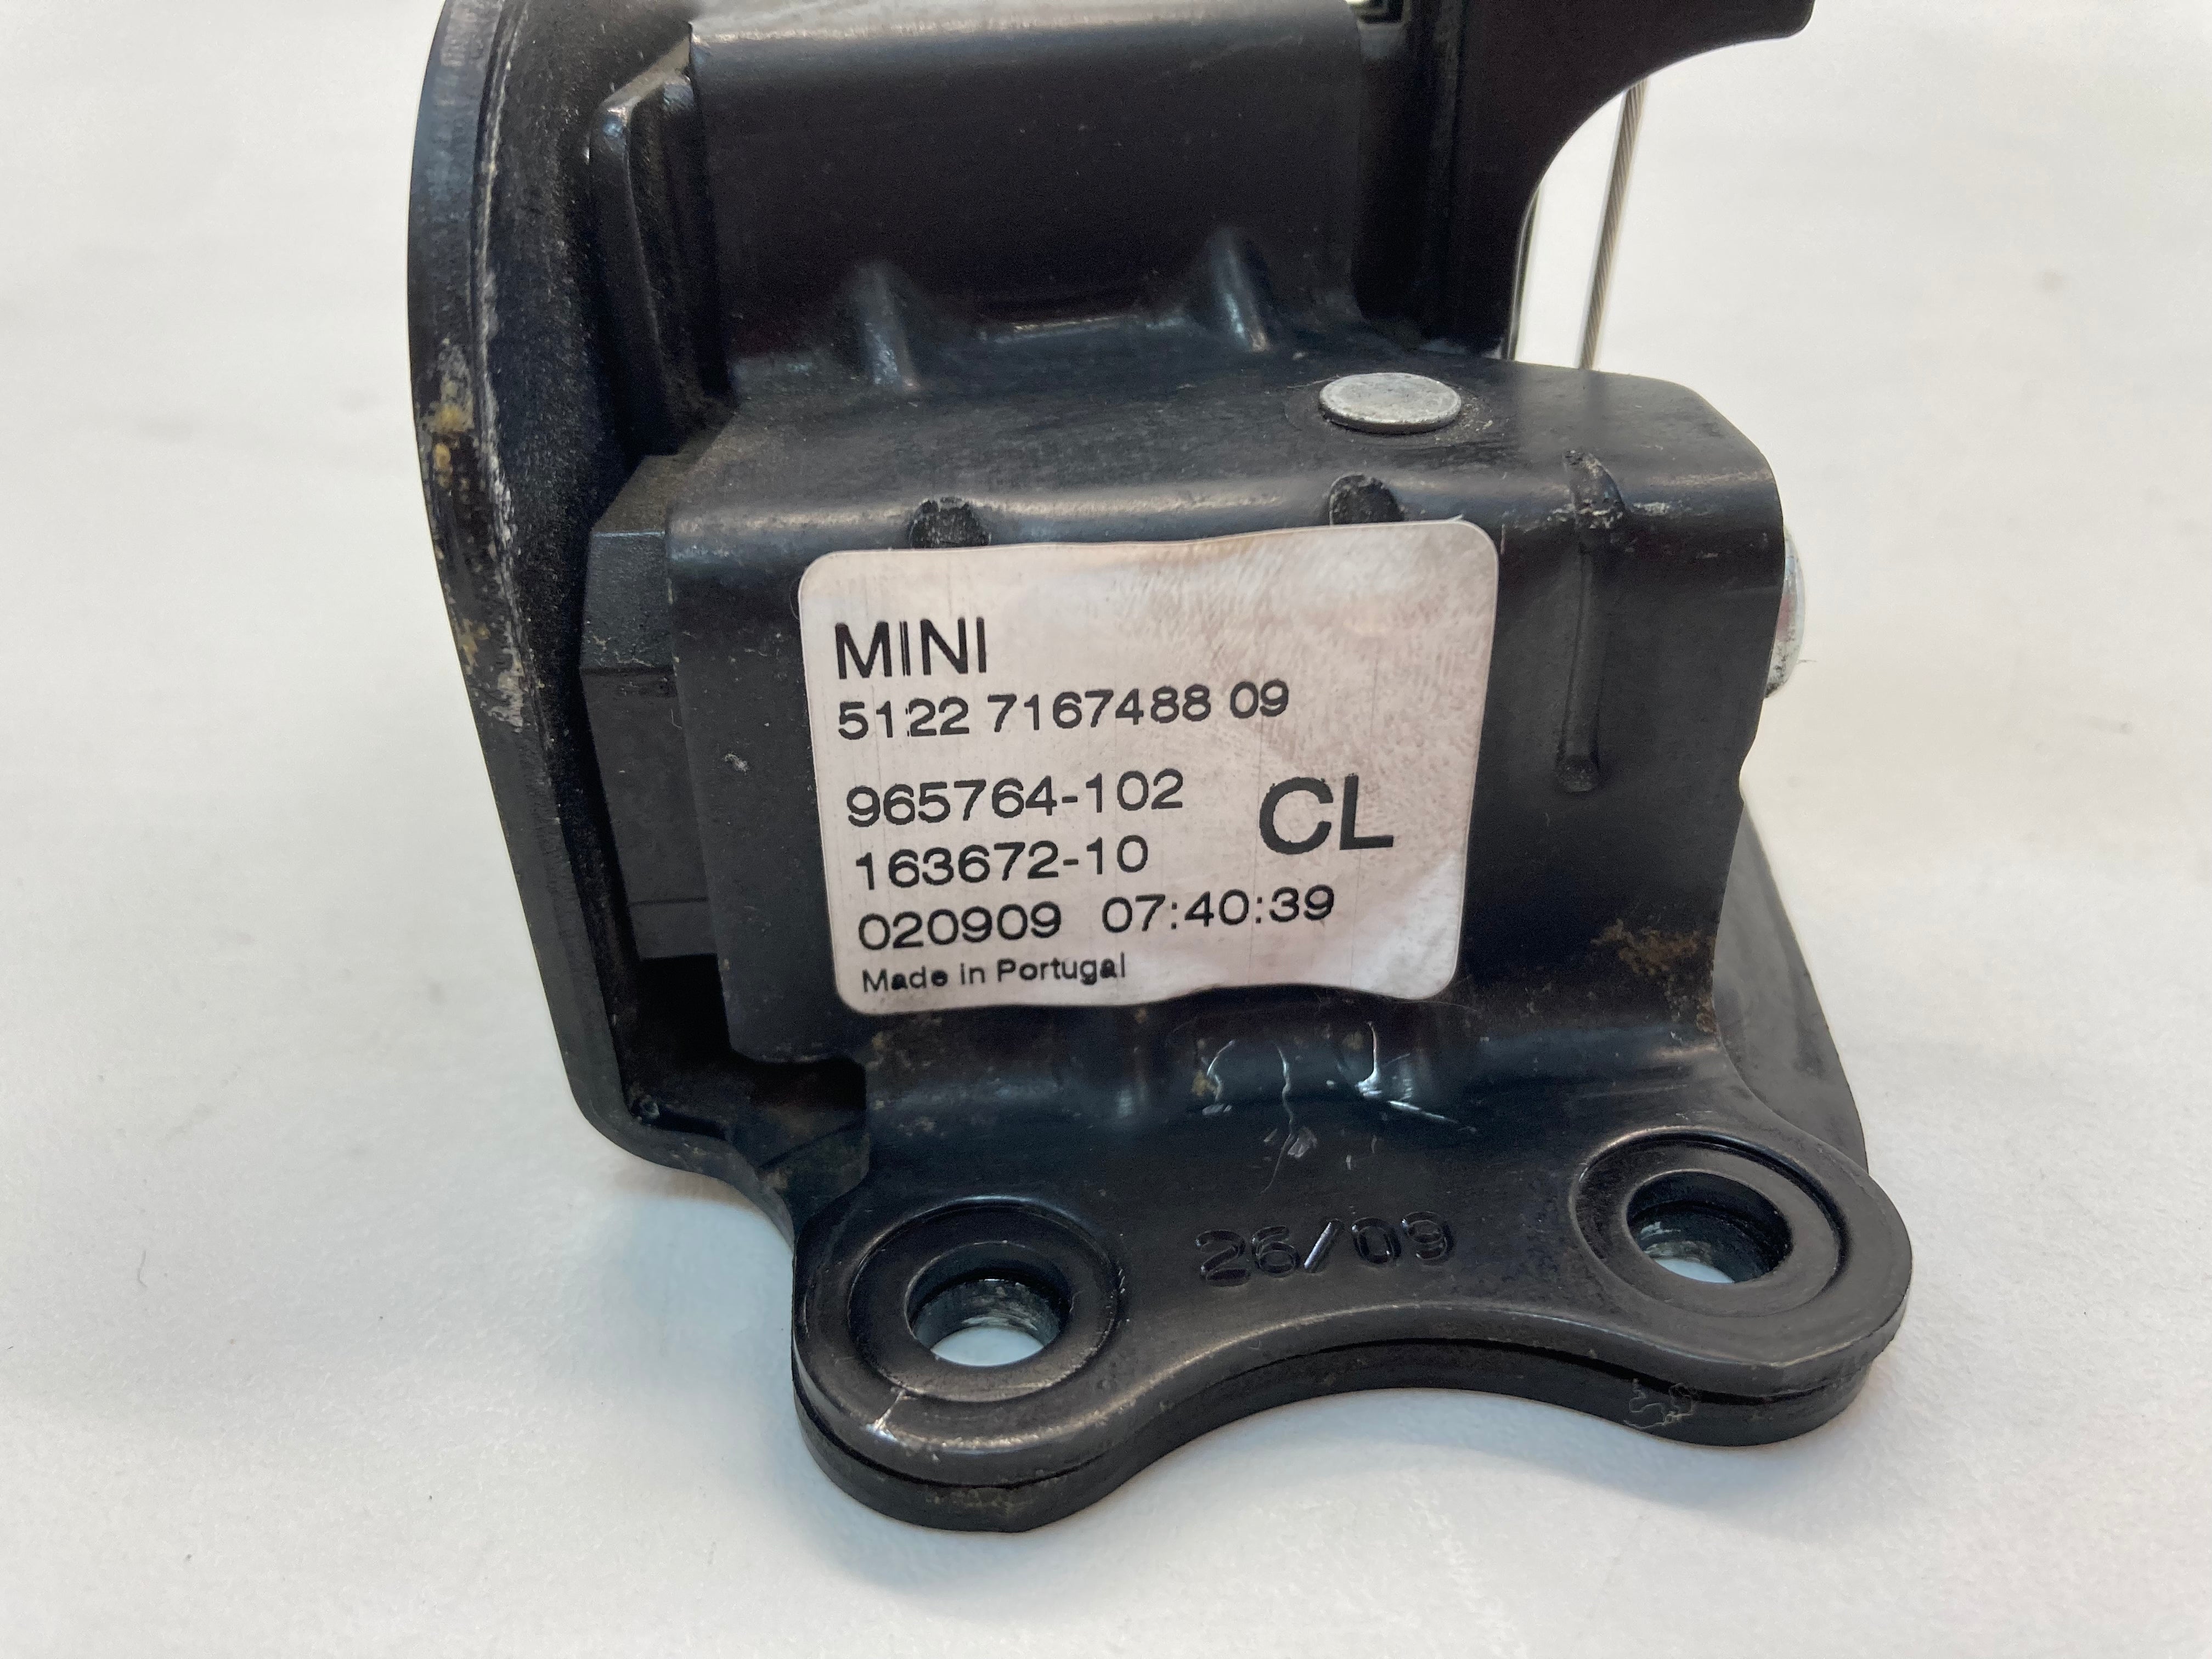 Mini Cooper ALLMAG 08-14 – Auto Lower 51227167488 Clubdoor Clubman Latch Parts R55